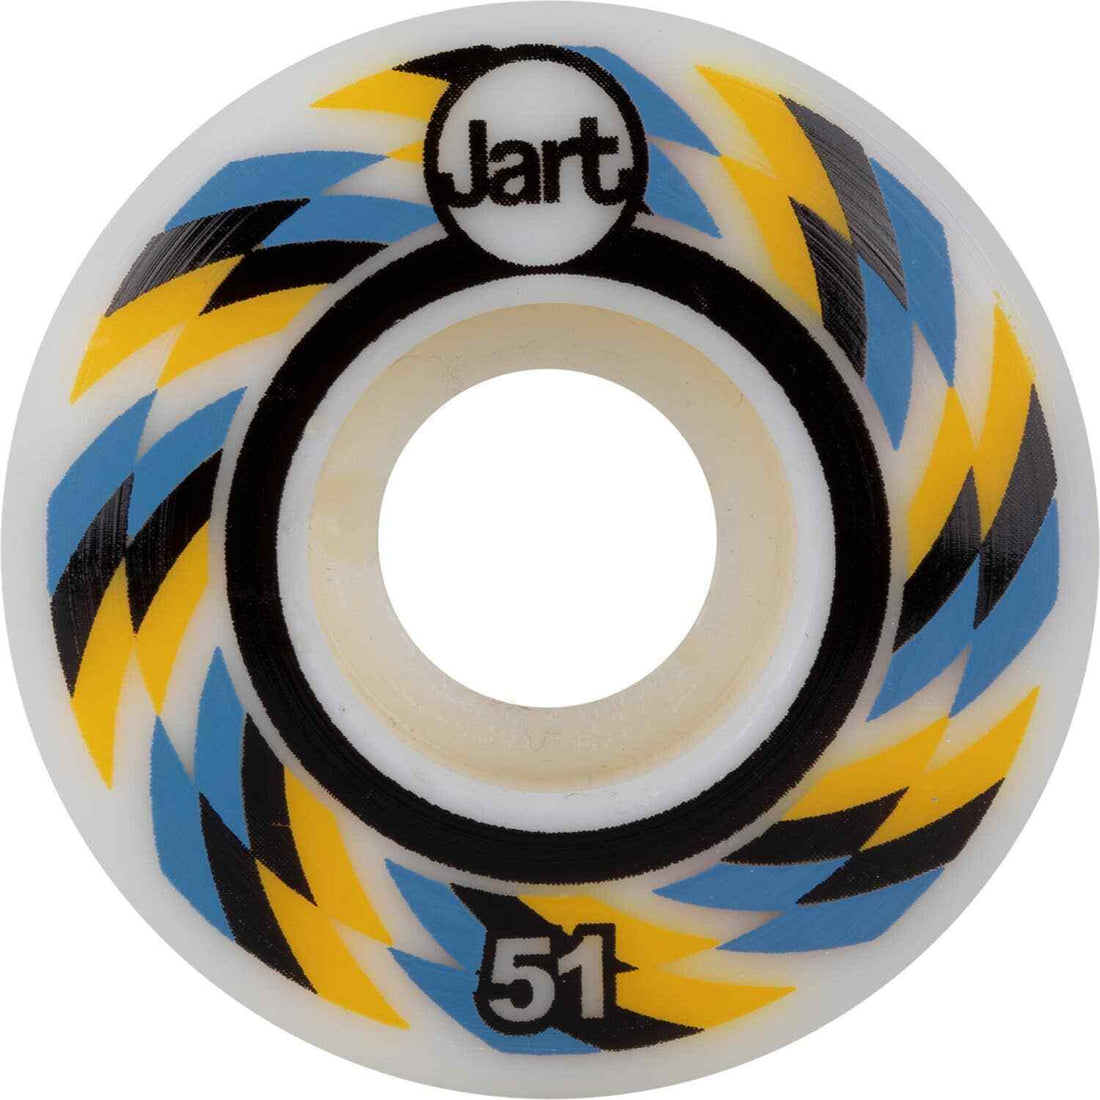 Jart Spiral Skateboard Wheels 51mm